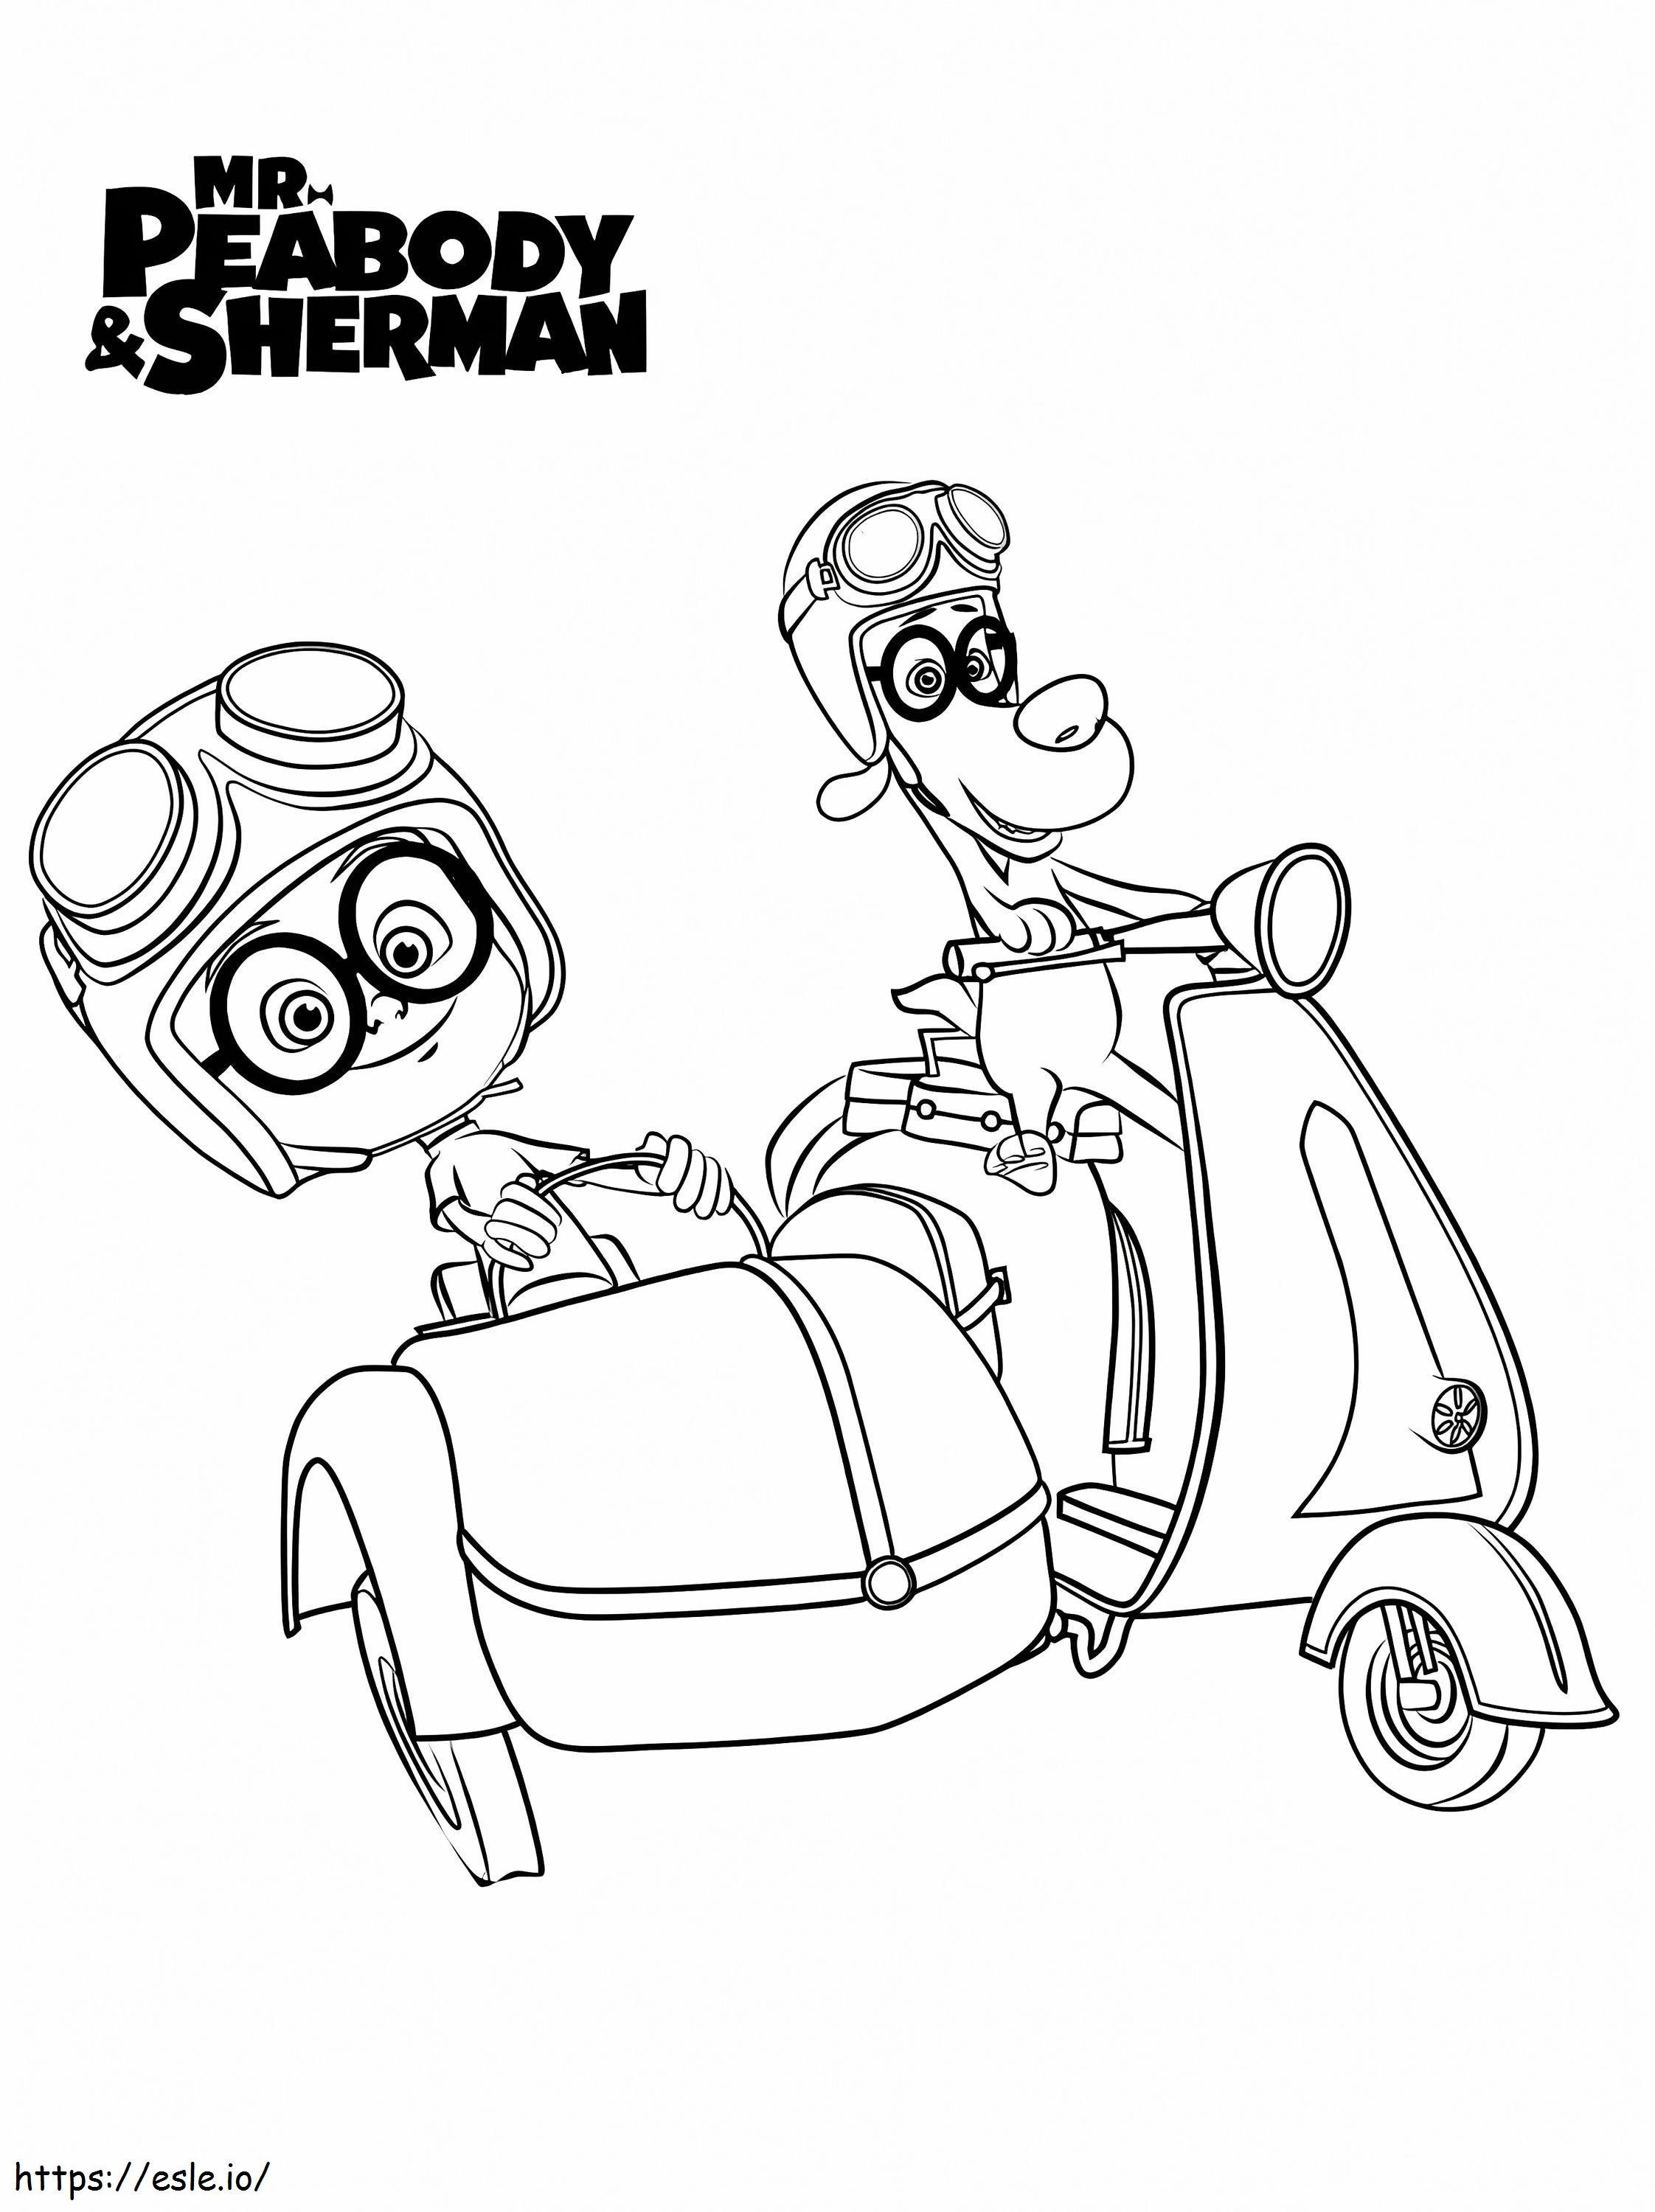 Domnul Peabody și Sherman 6 de colorat